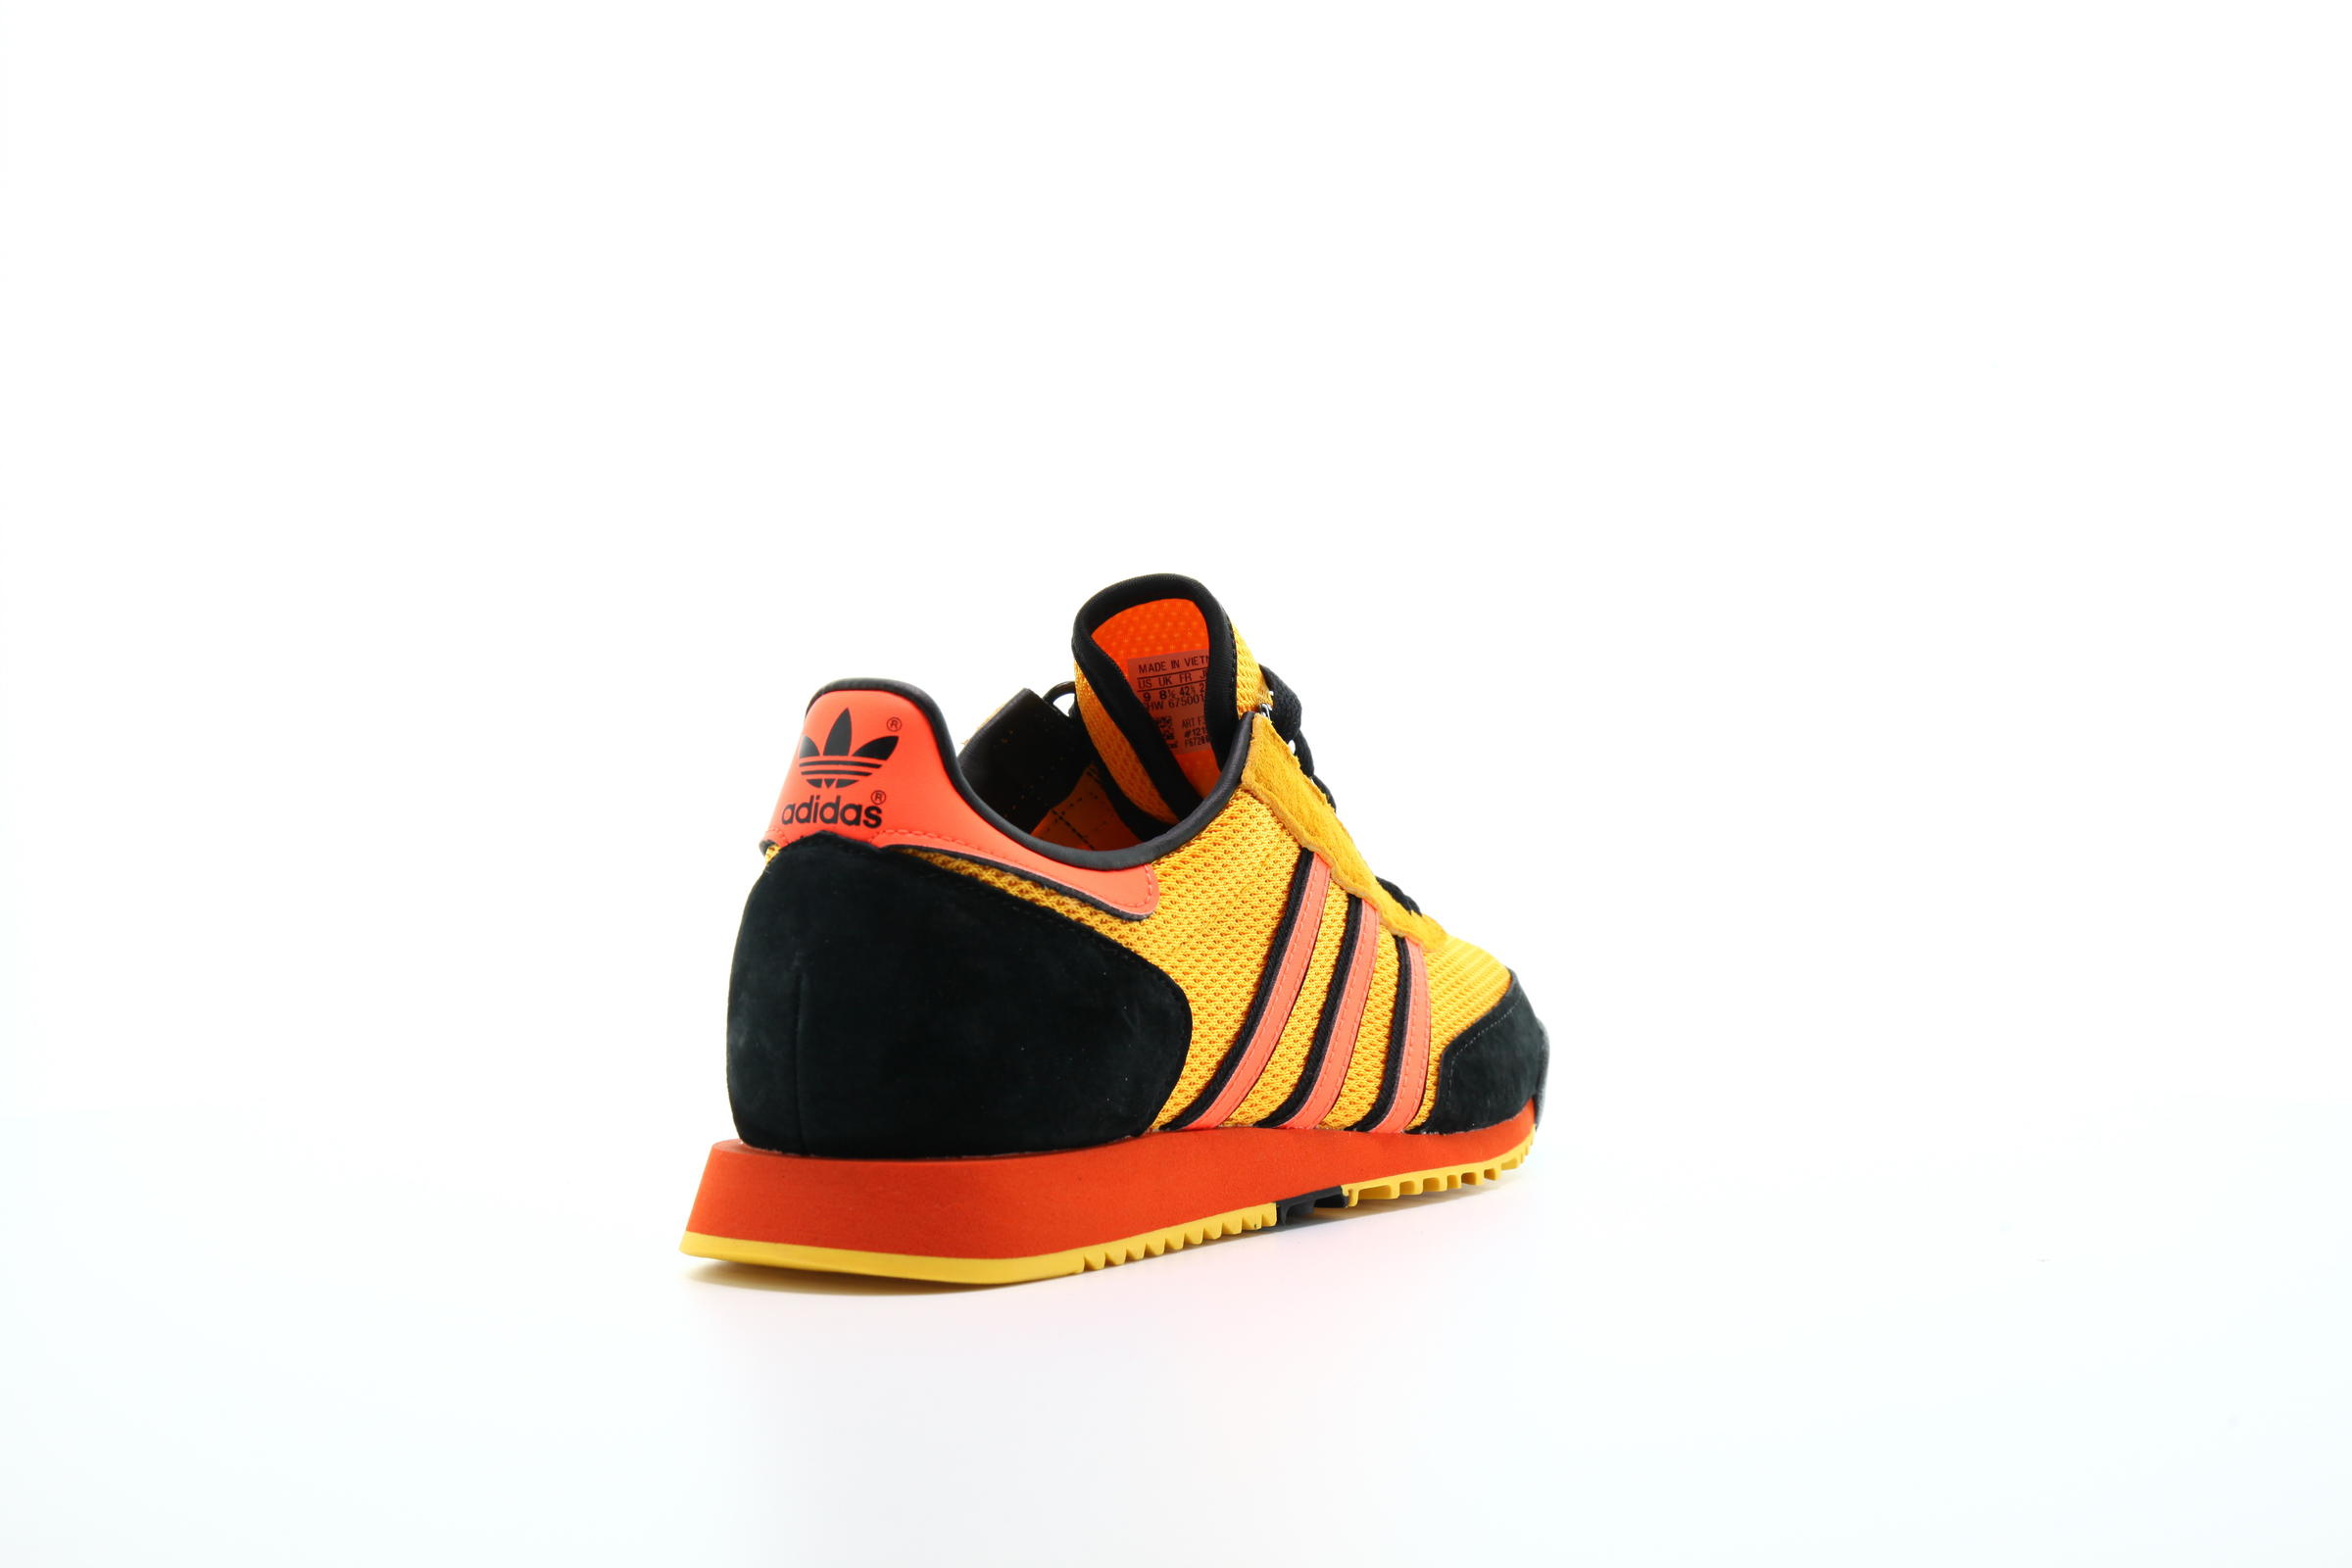 adidas Originals SL80 (A) Spezial "Orange Black"